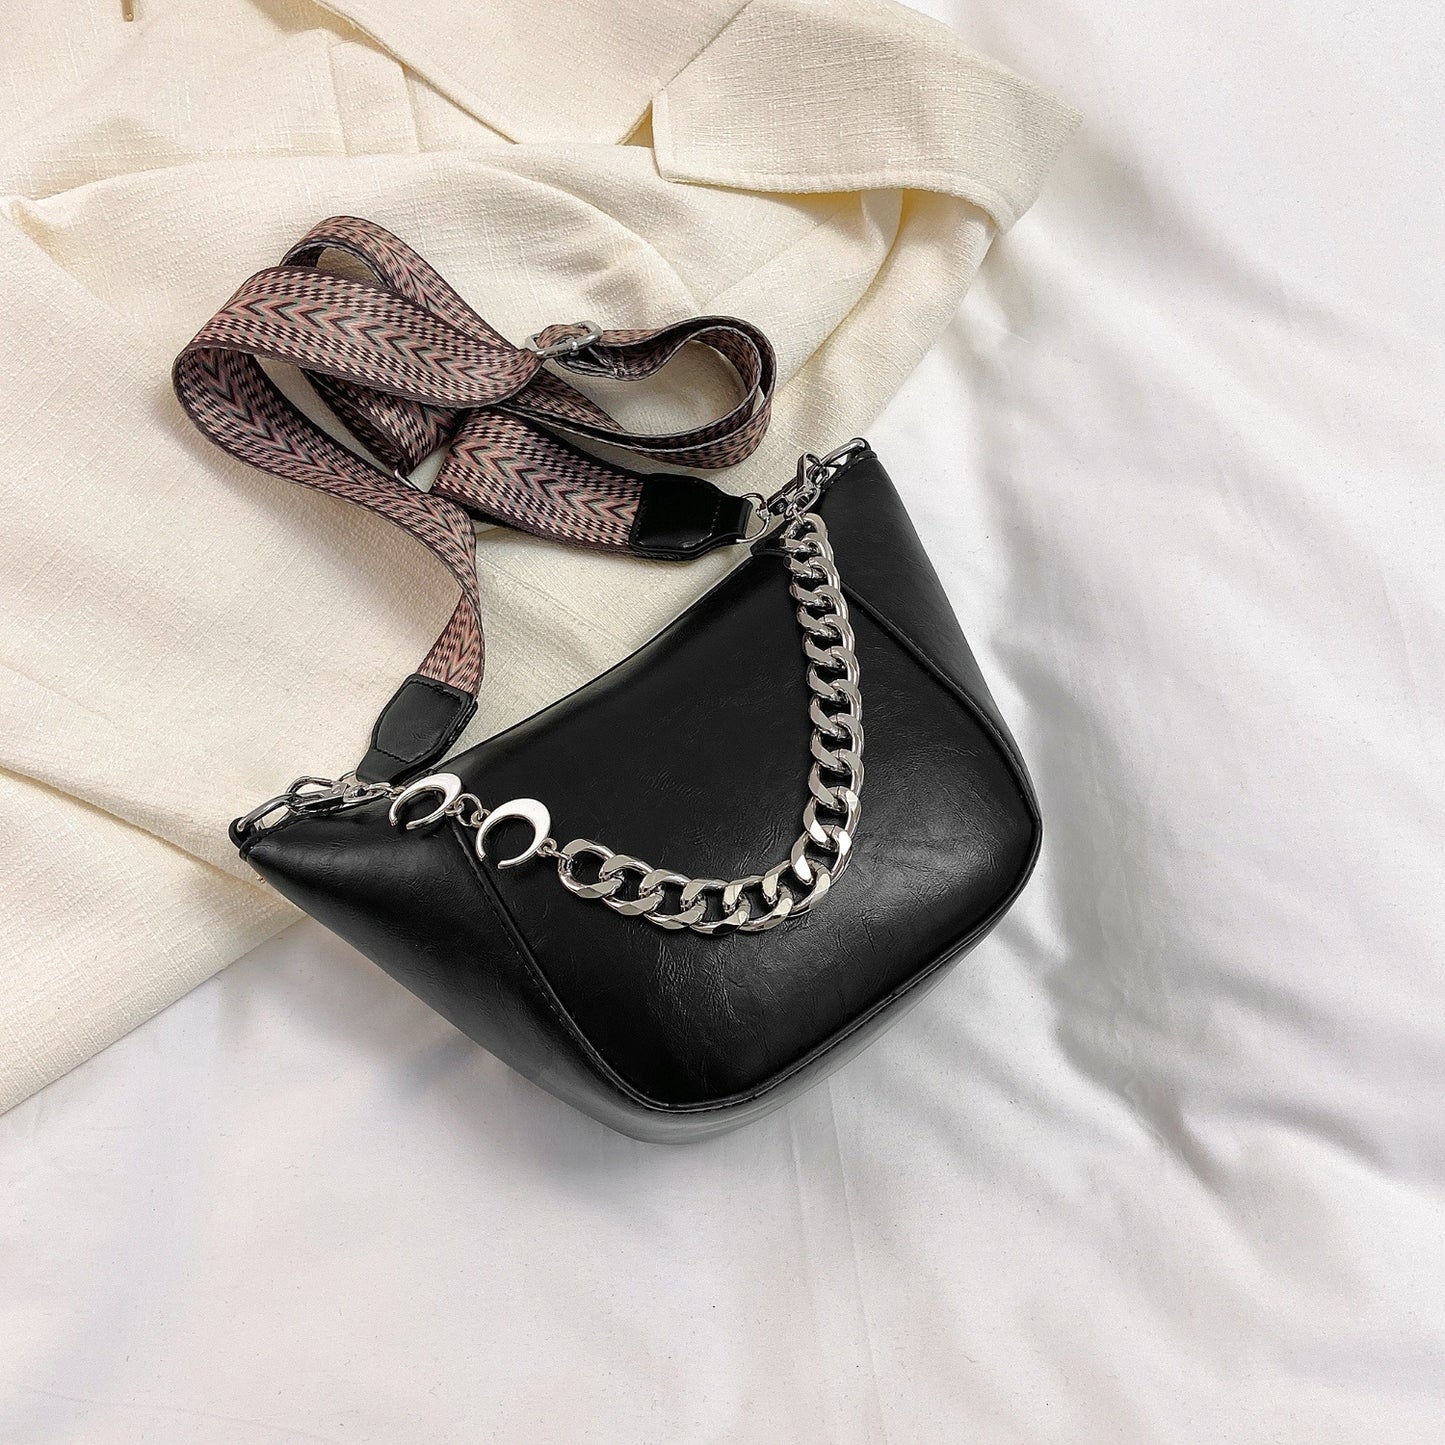 PU Leather Chain Trim Crossbody Bag Black One Size 